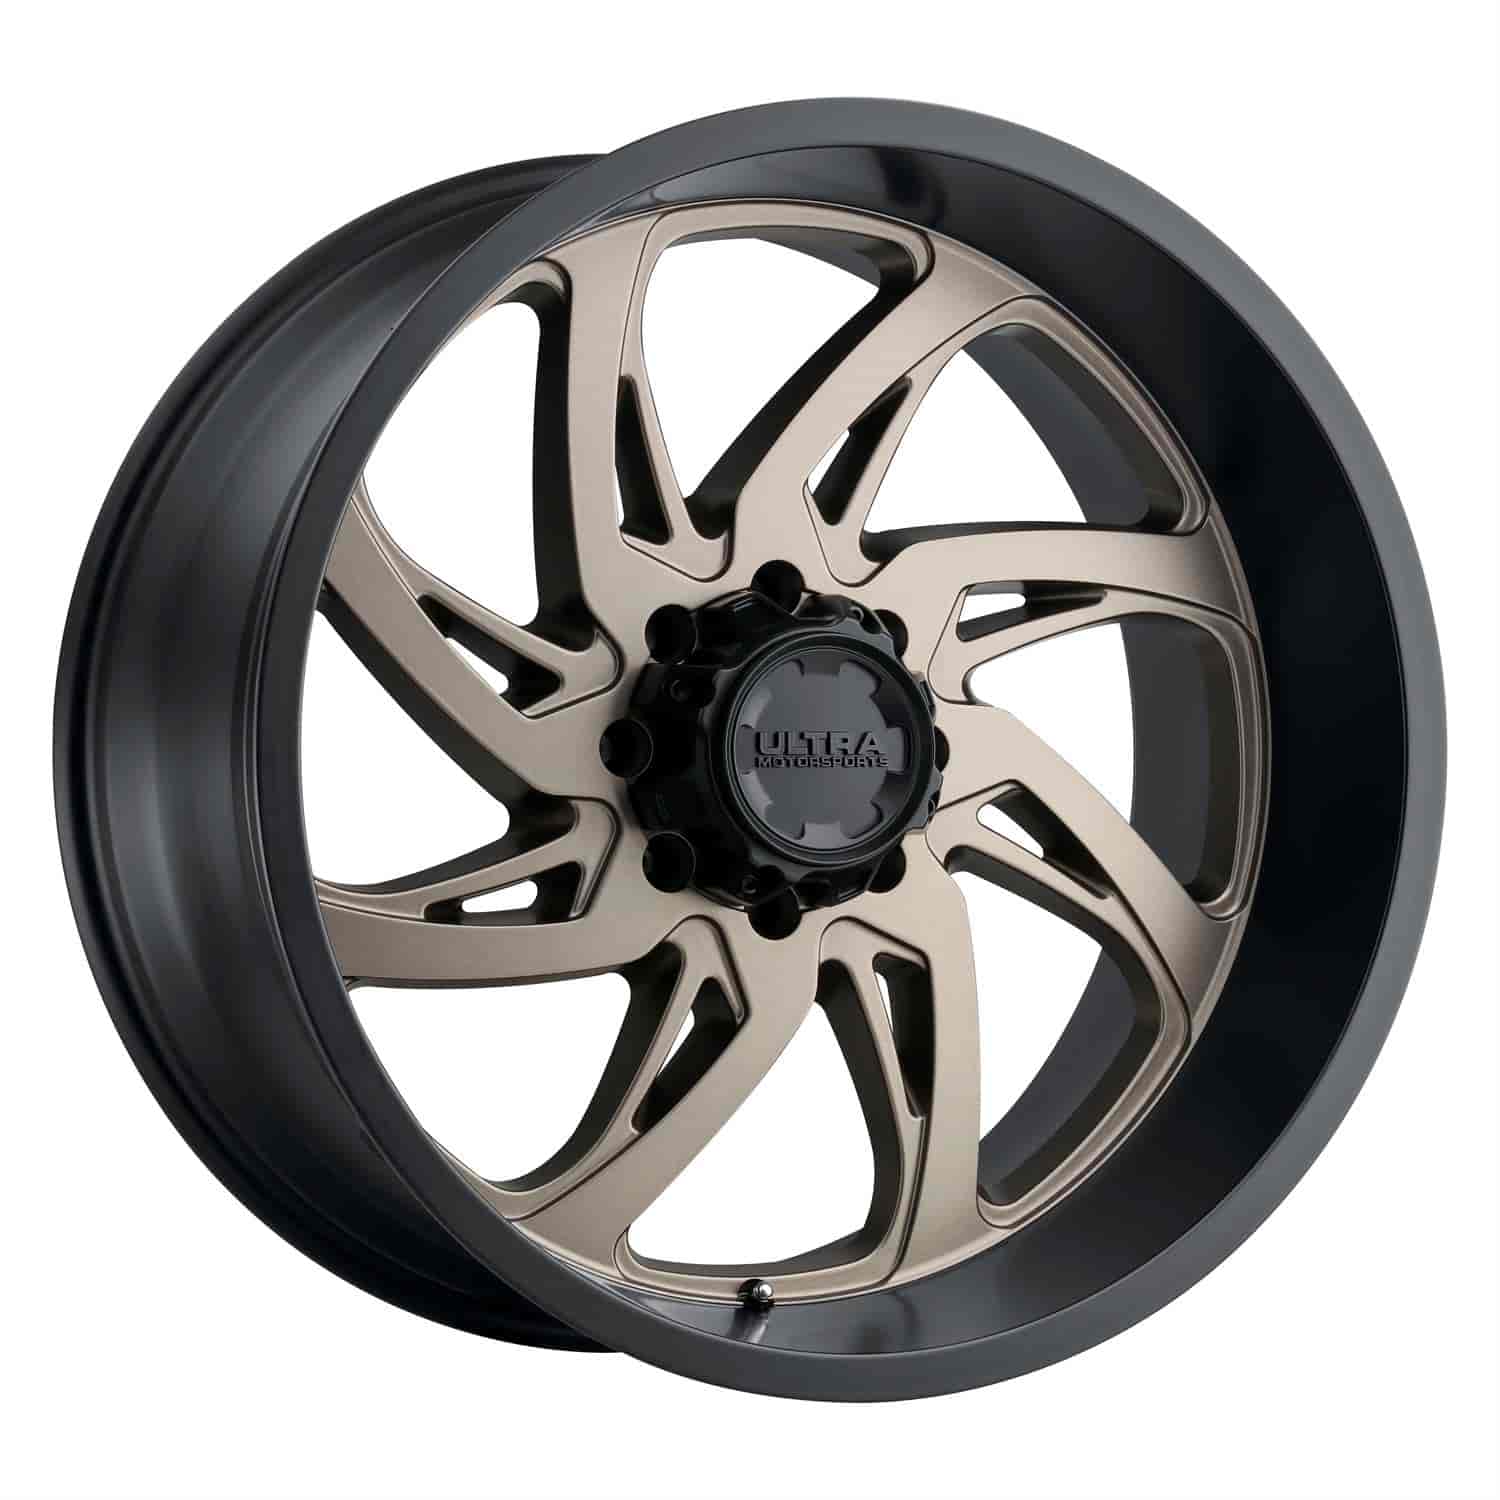 230-Series Villain Wheel, Size: 20x10", Bolt Pattern: 8x170 mm [Dark Satin Bronze w/Satin Black Lip]